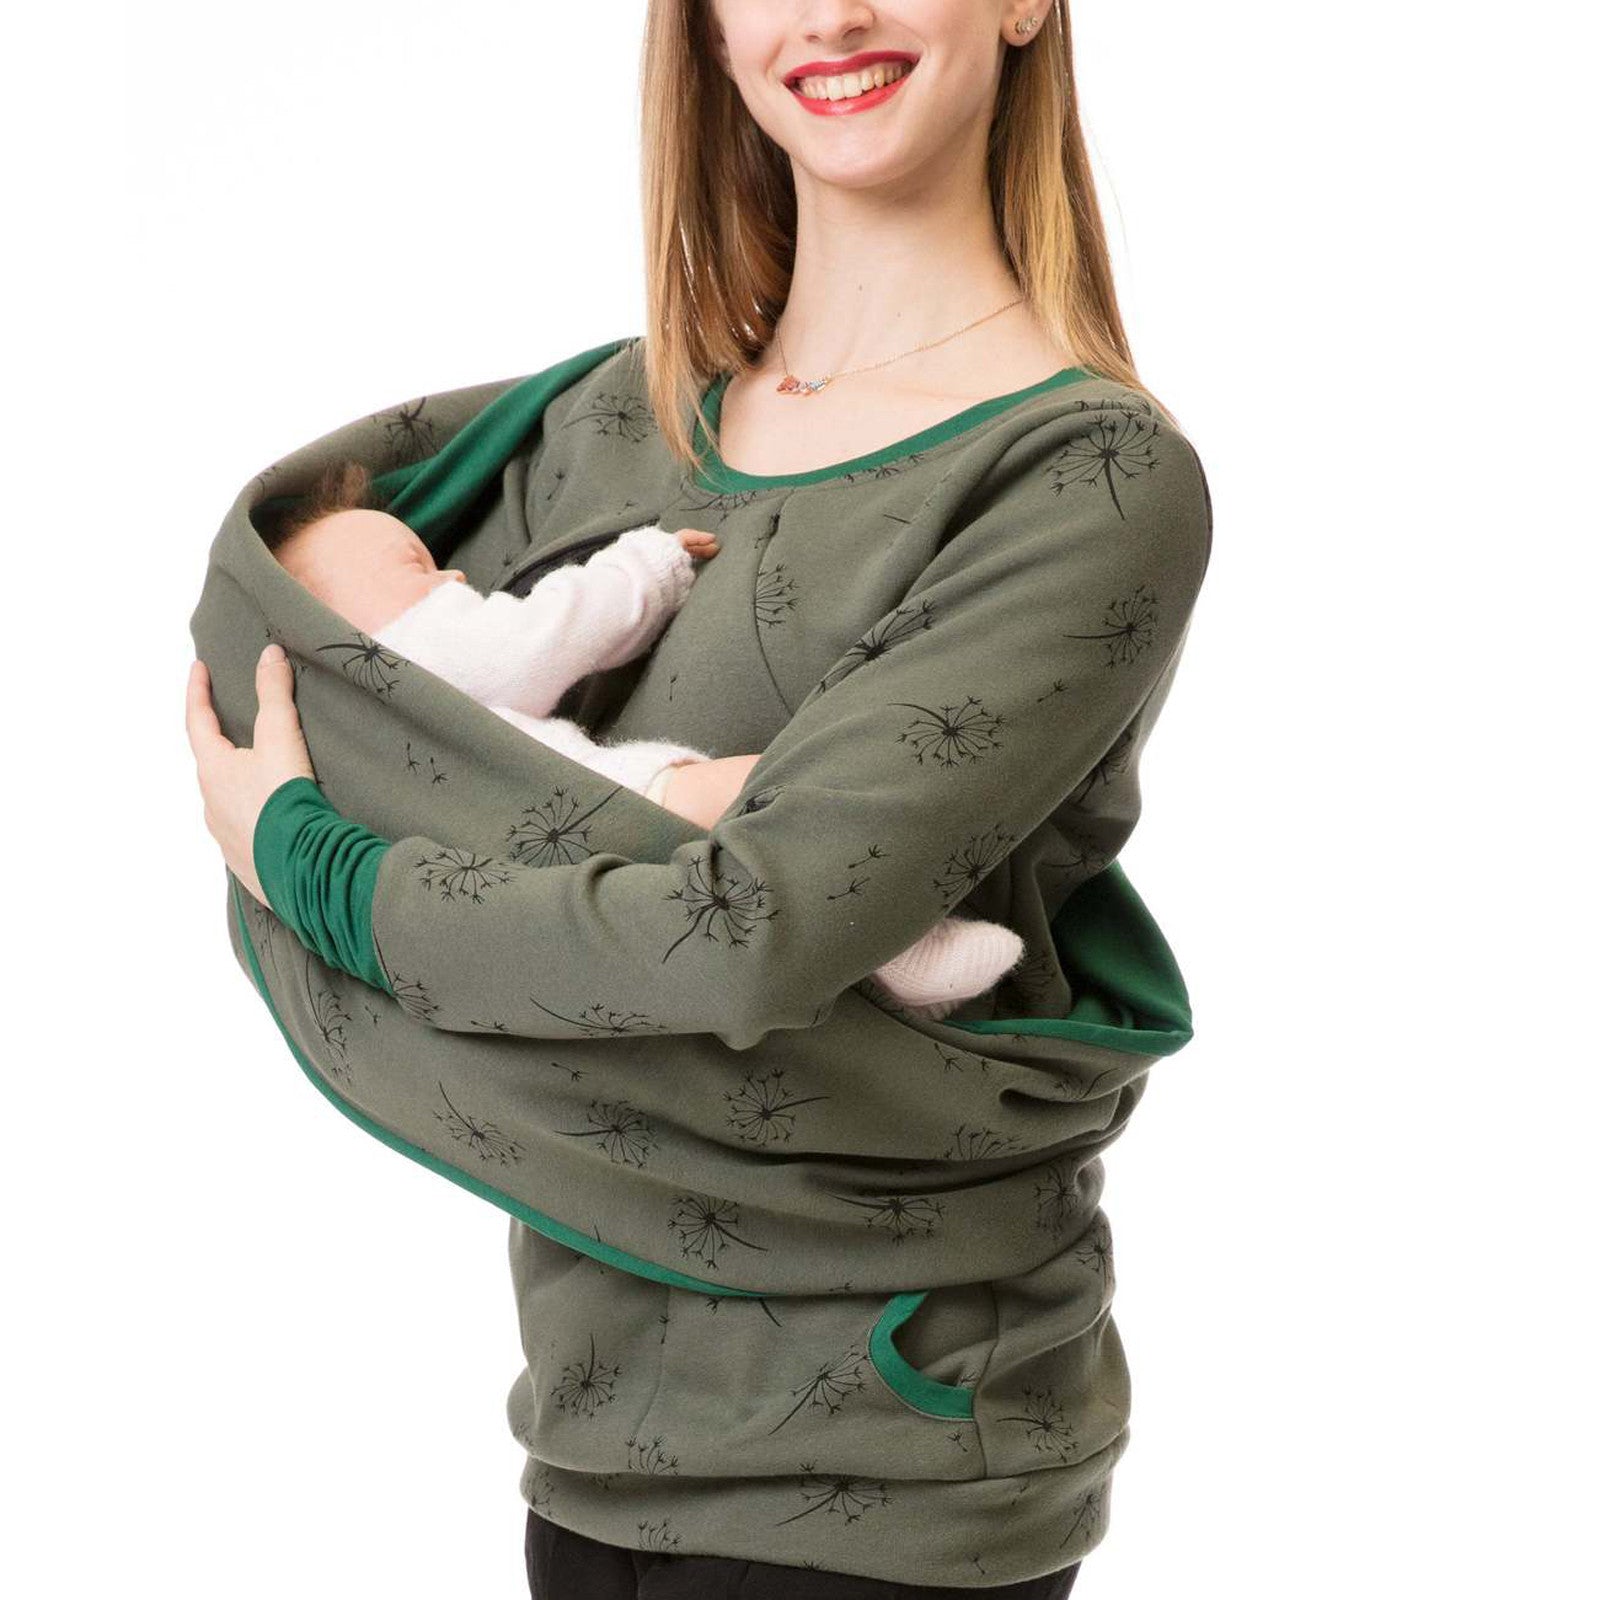 New Maternity Nursing Hoodie Sweatshirt Winter Autumn Pregnancy Clothes Pregnant Women Breastfeeding Sweater Shirts hoodies Top